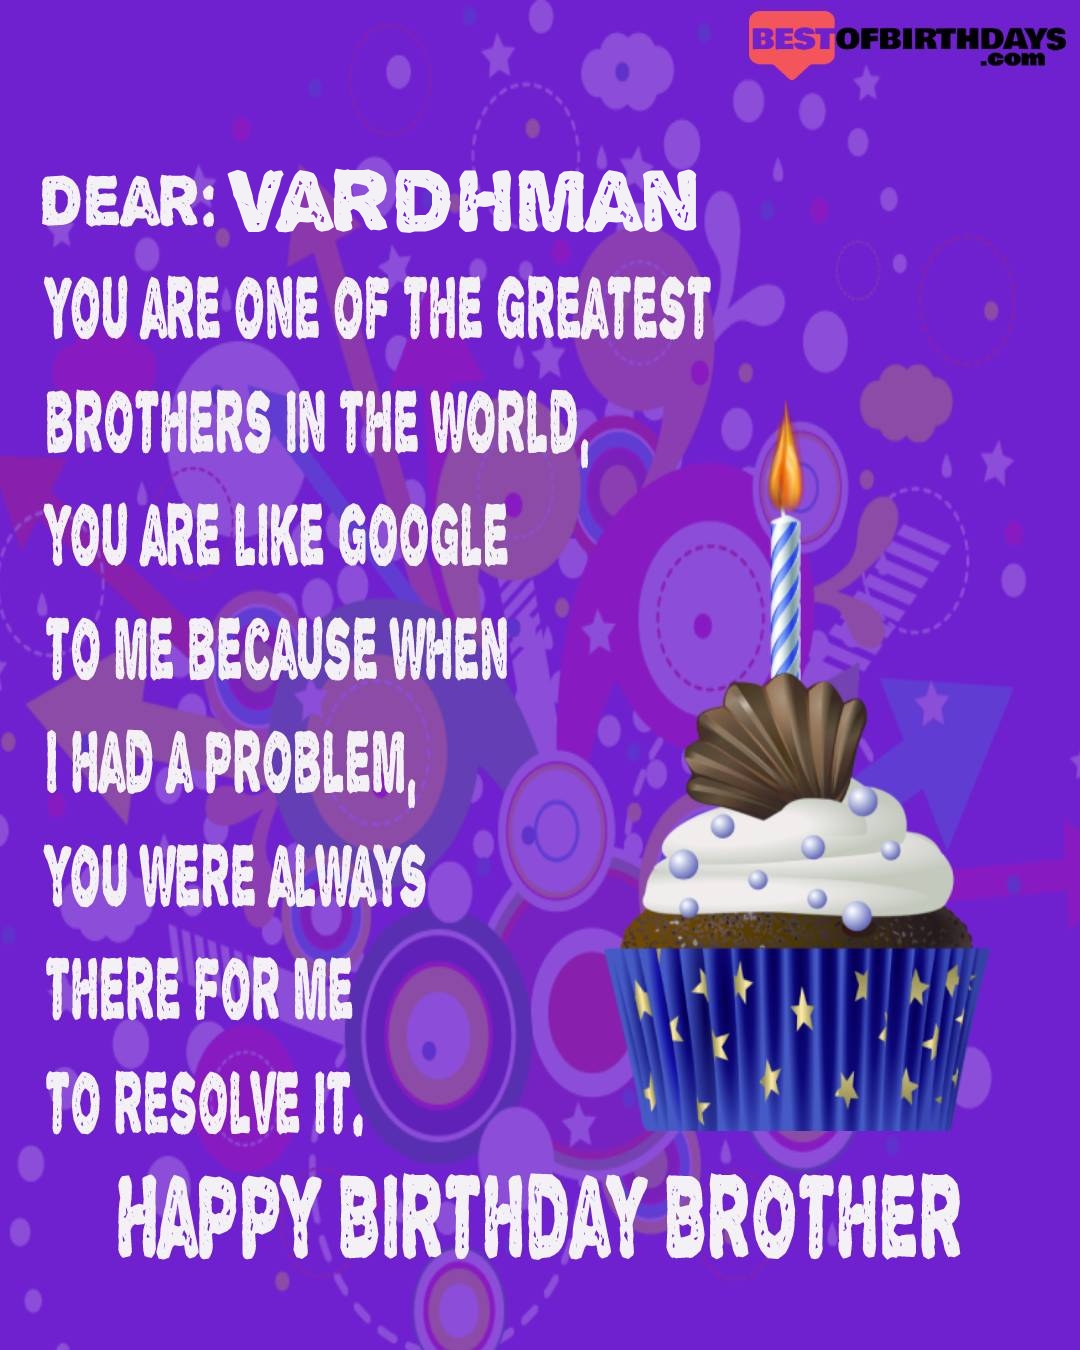 Happy birthday vardhman bhai brother bro